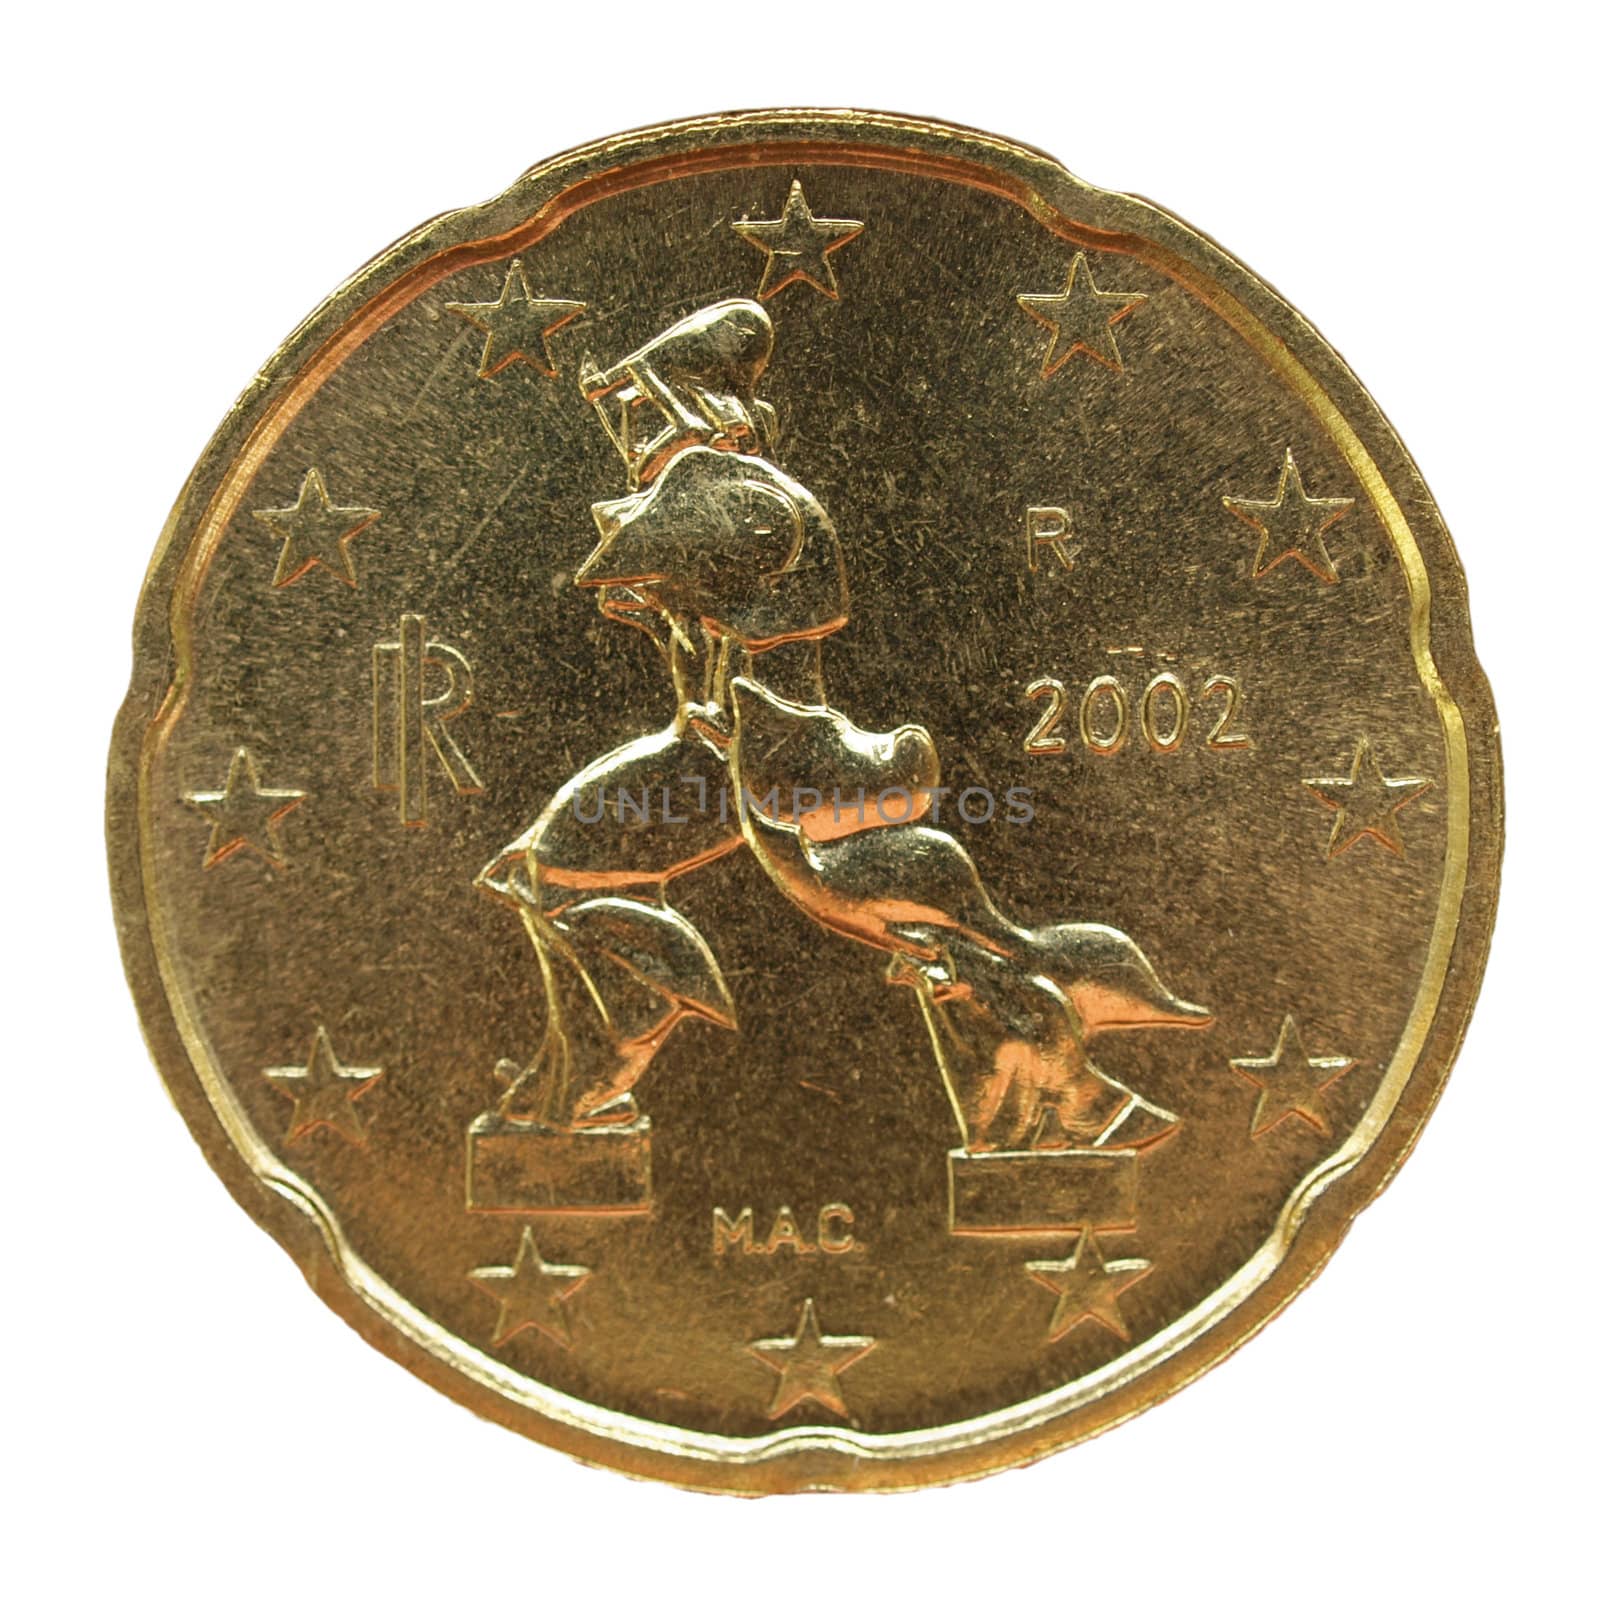 Coin by claudiodivizia